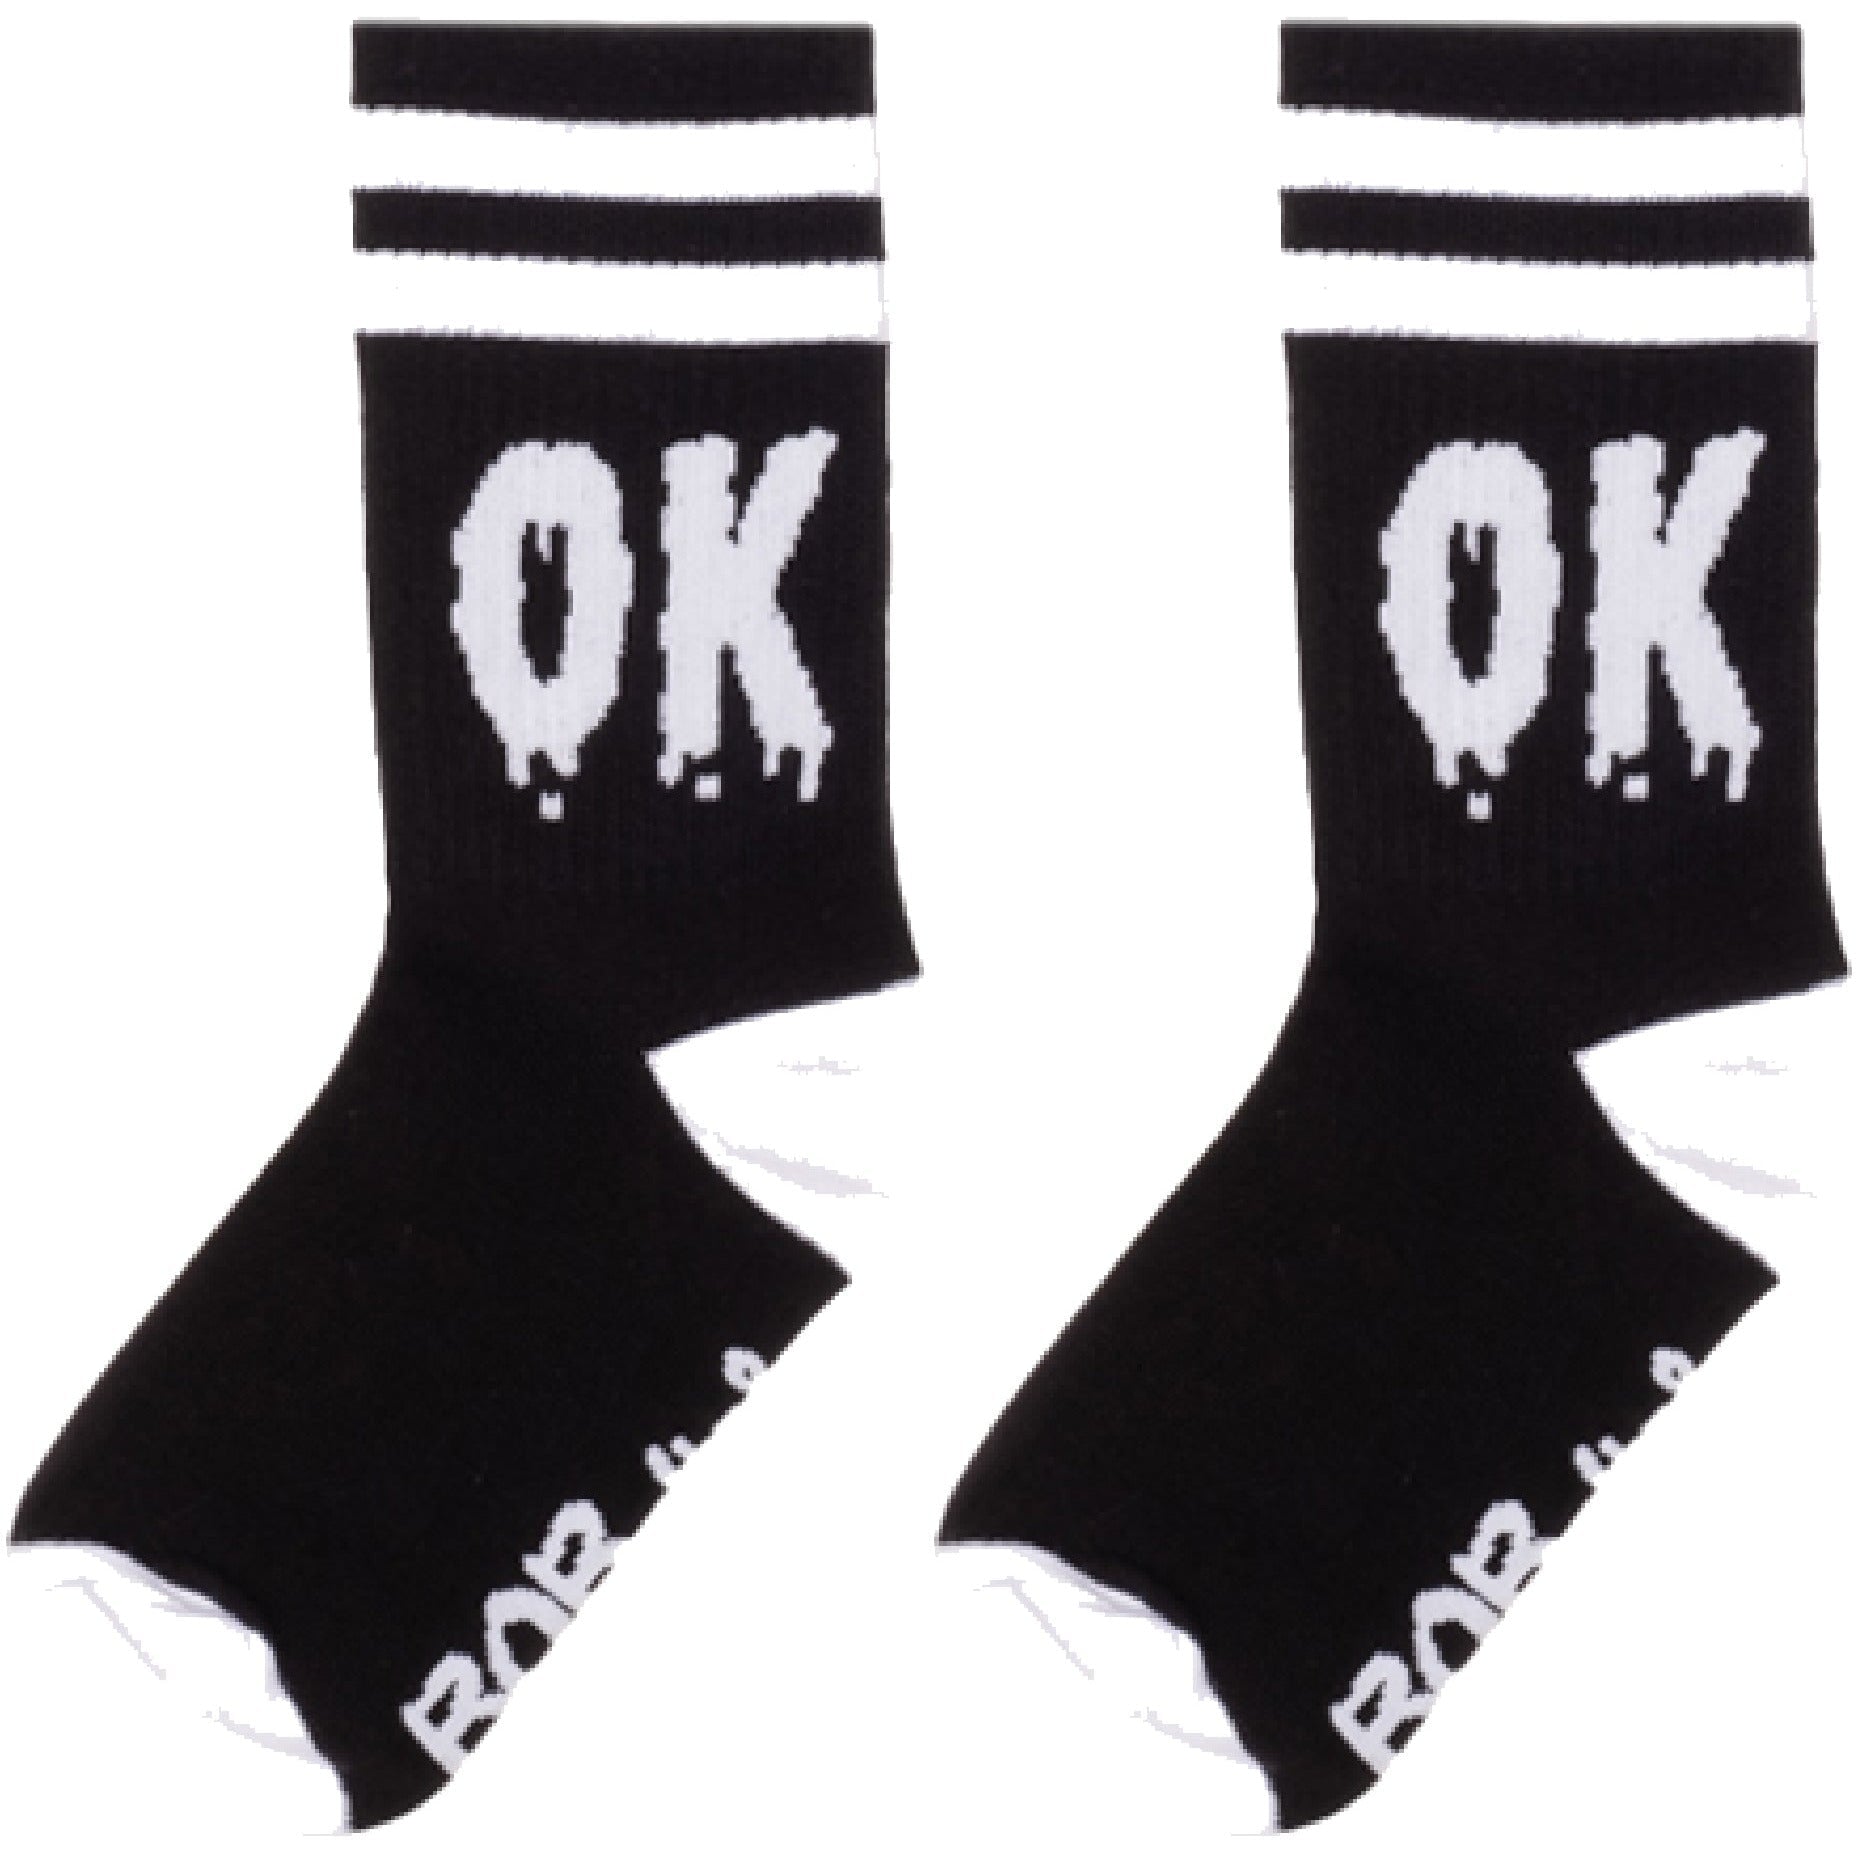 OK Skate Socks